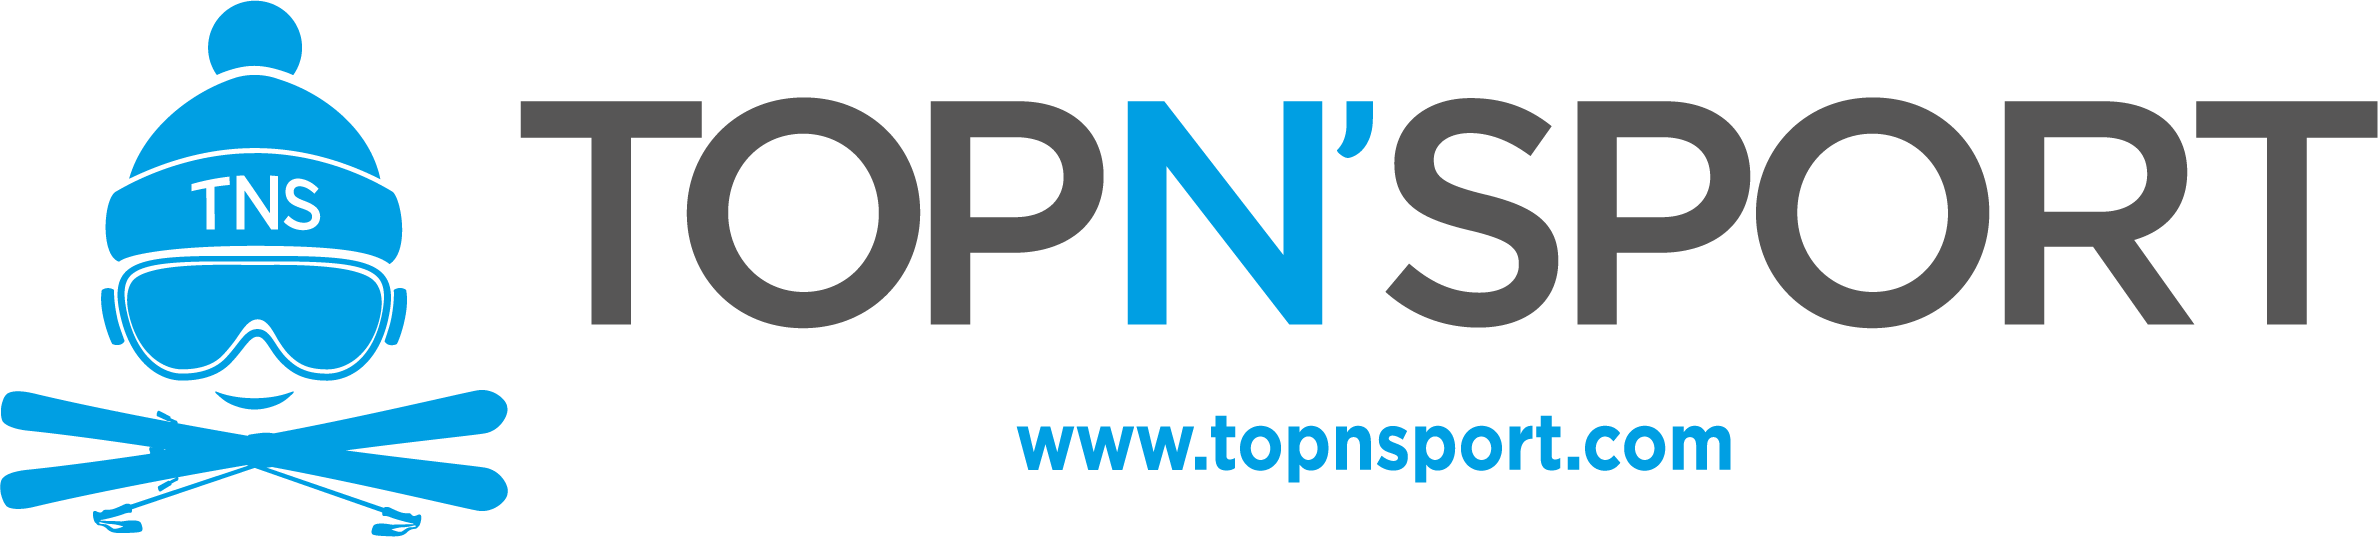 Logo topNsport site blue